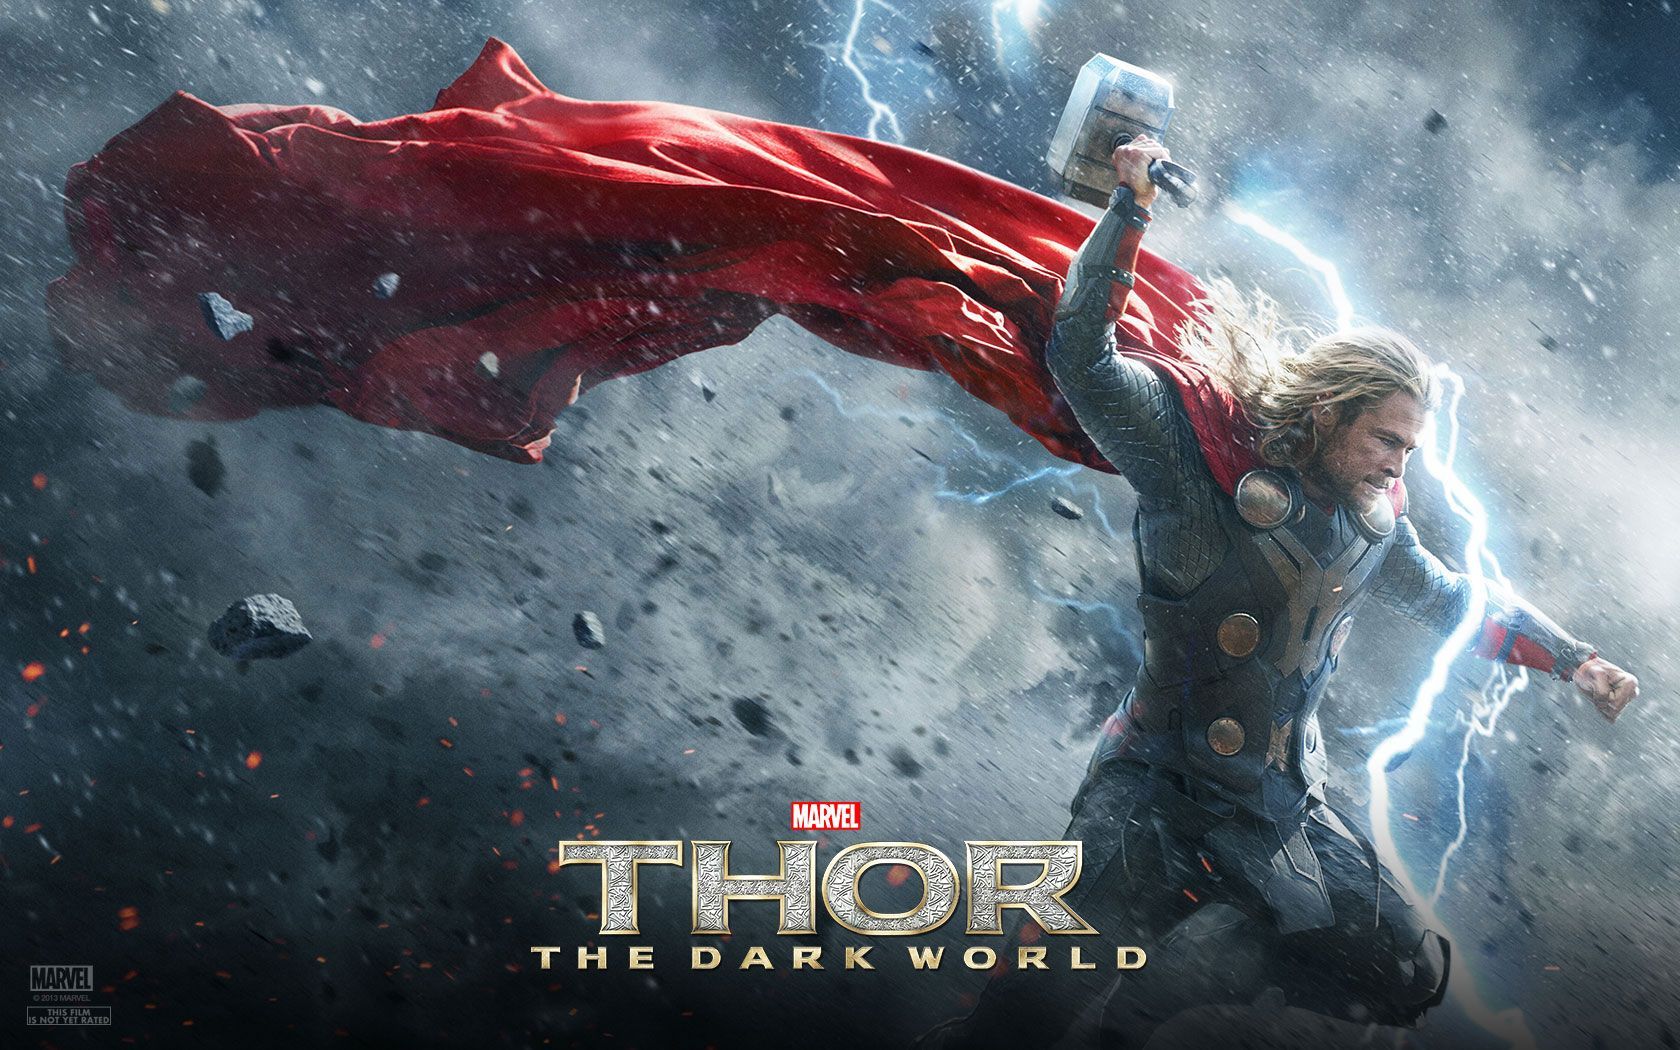 Thor 2 The Dark World 2013 Movie Wallpaper HD & Facebook Covers. The dark world, Marvel thor, Marvel movies